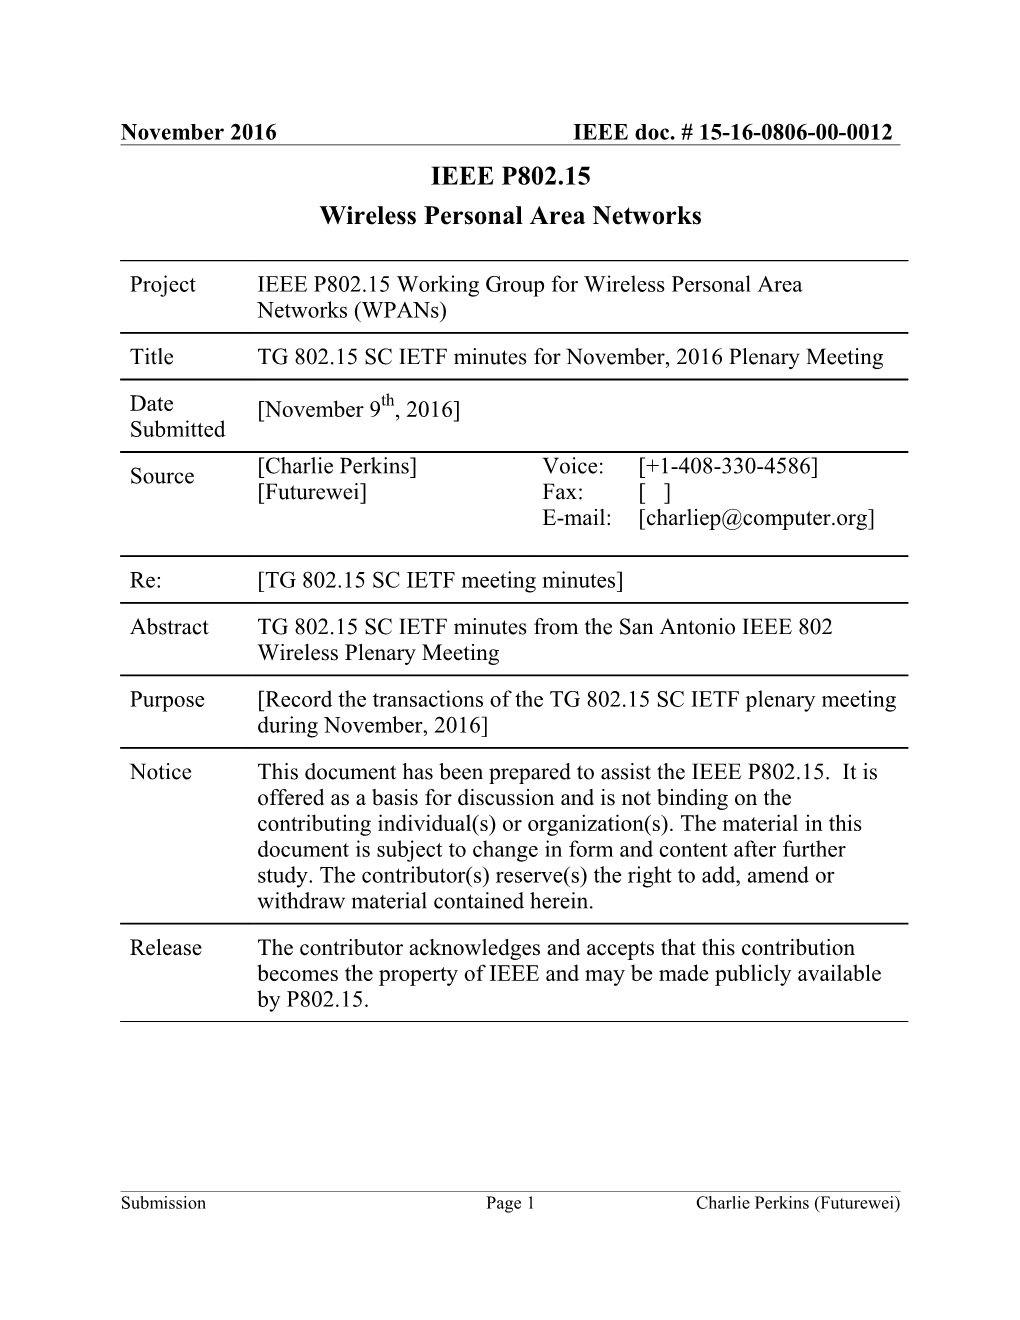 Minutes for IEEE TG 802.15SC IETF San Antonio Meeting